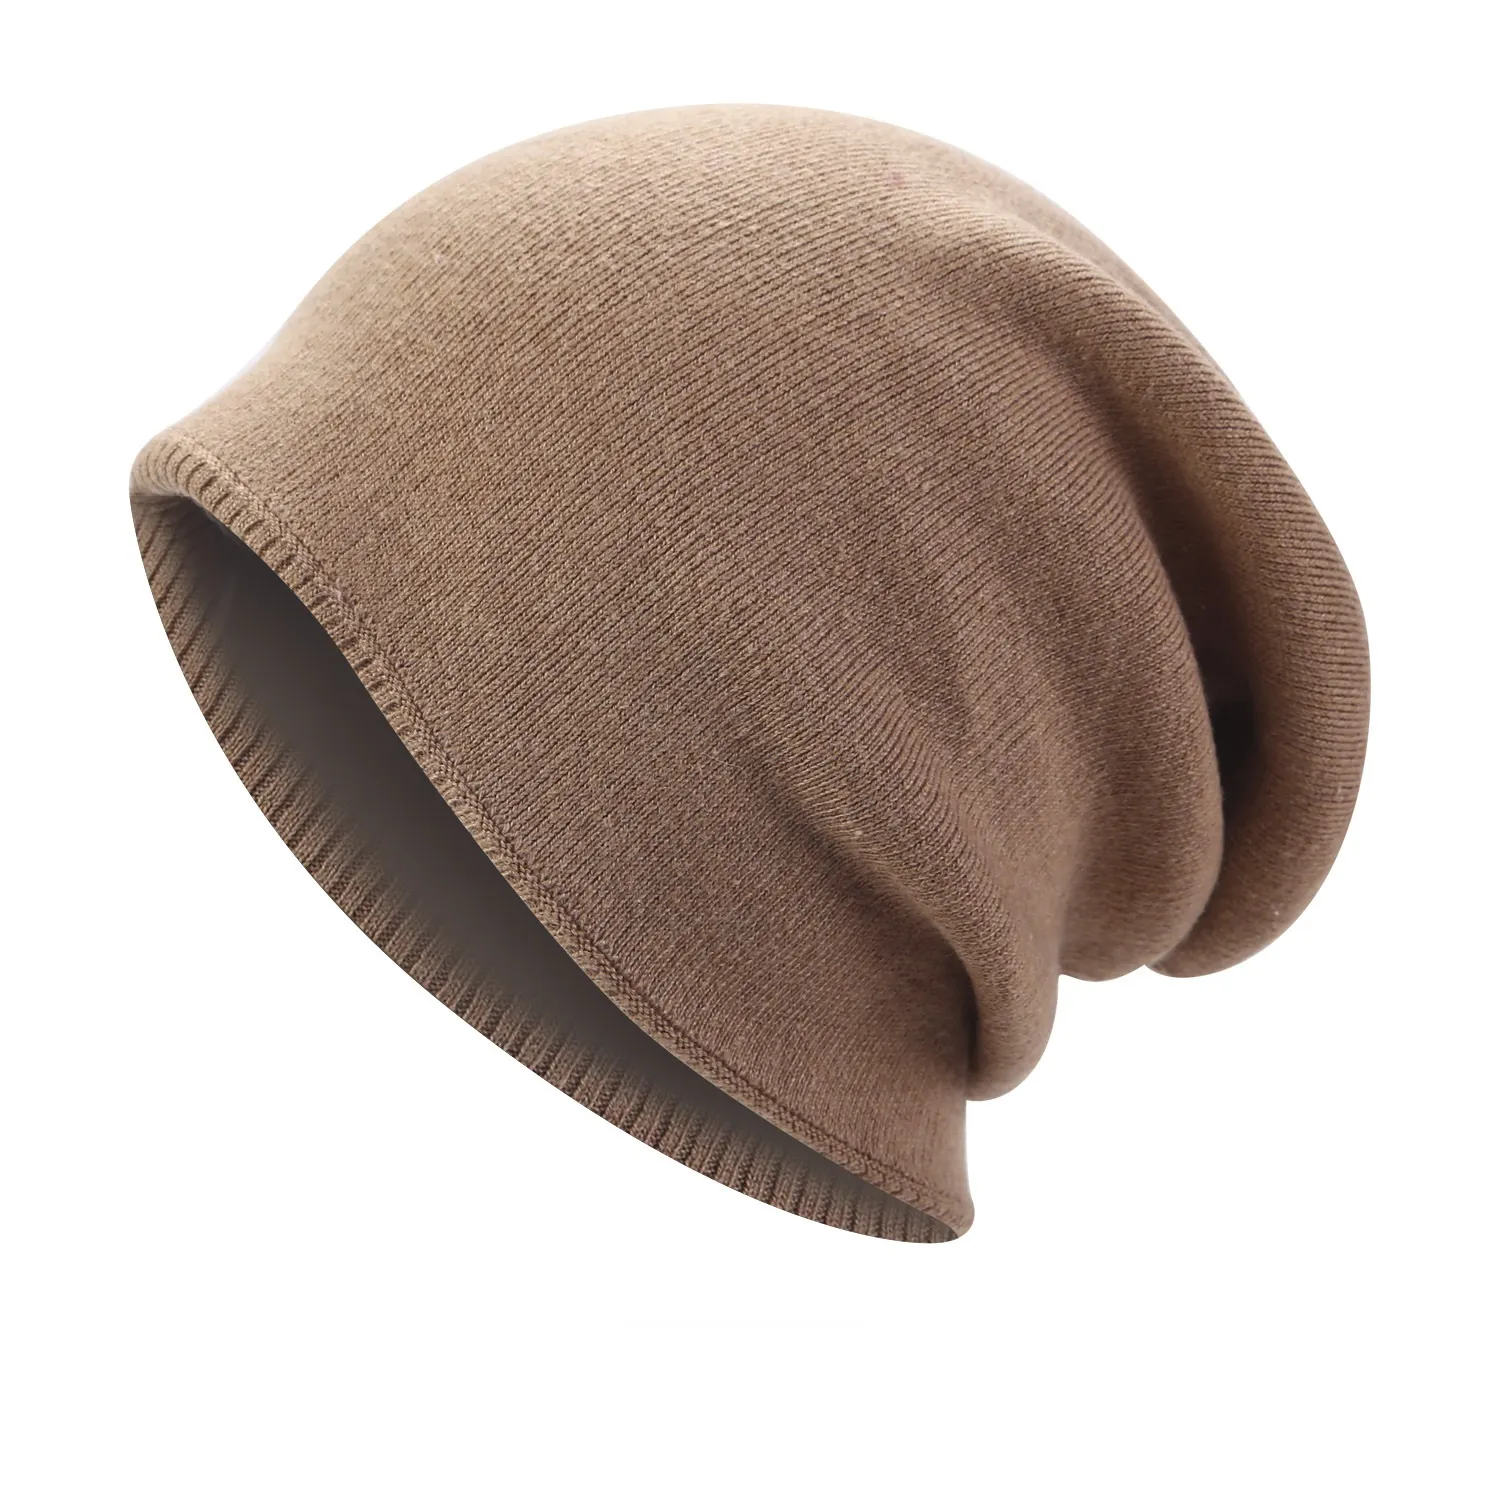 Mens Winter Hat Wool Beanies Knit Warm Comfortable Gorras Bonnet Skullies Young Woman Hip Hop Fashion Style Hat14157505174064